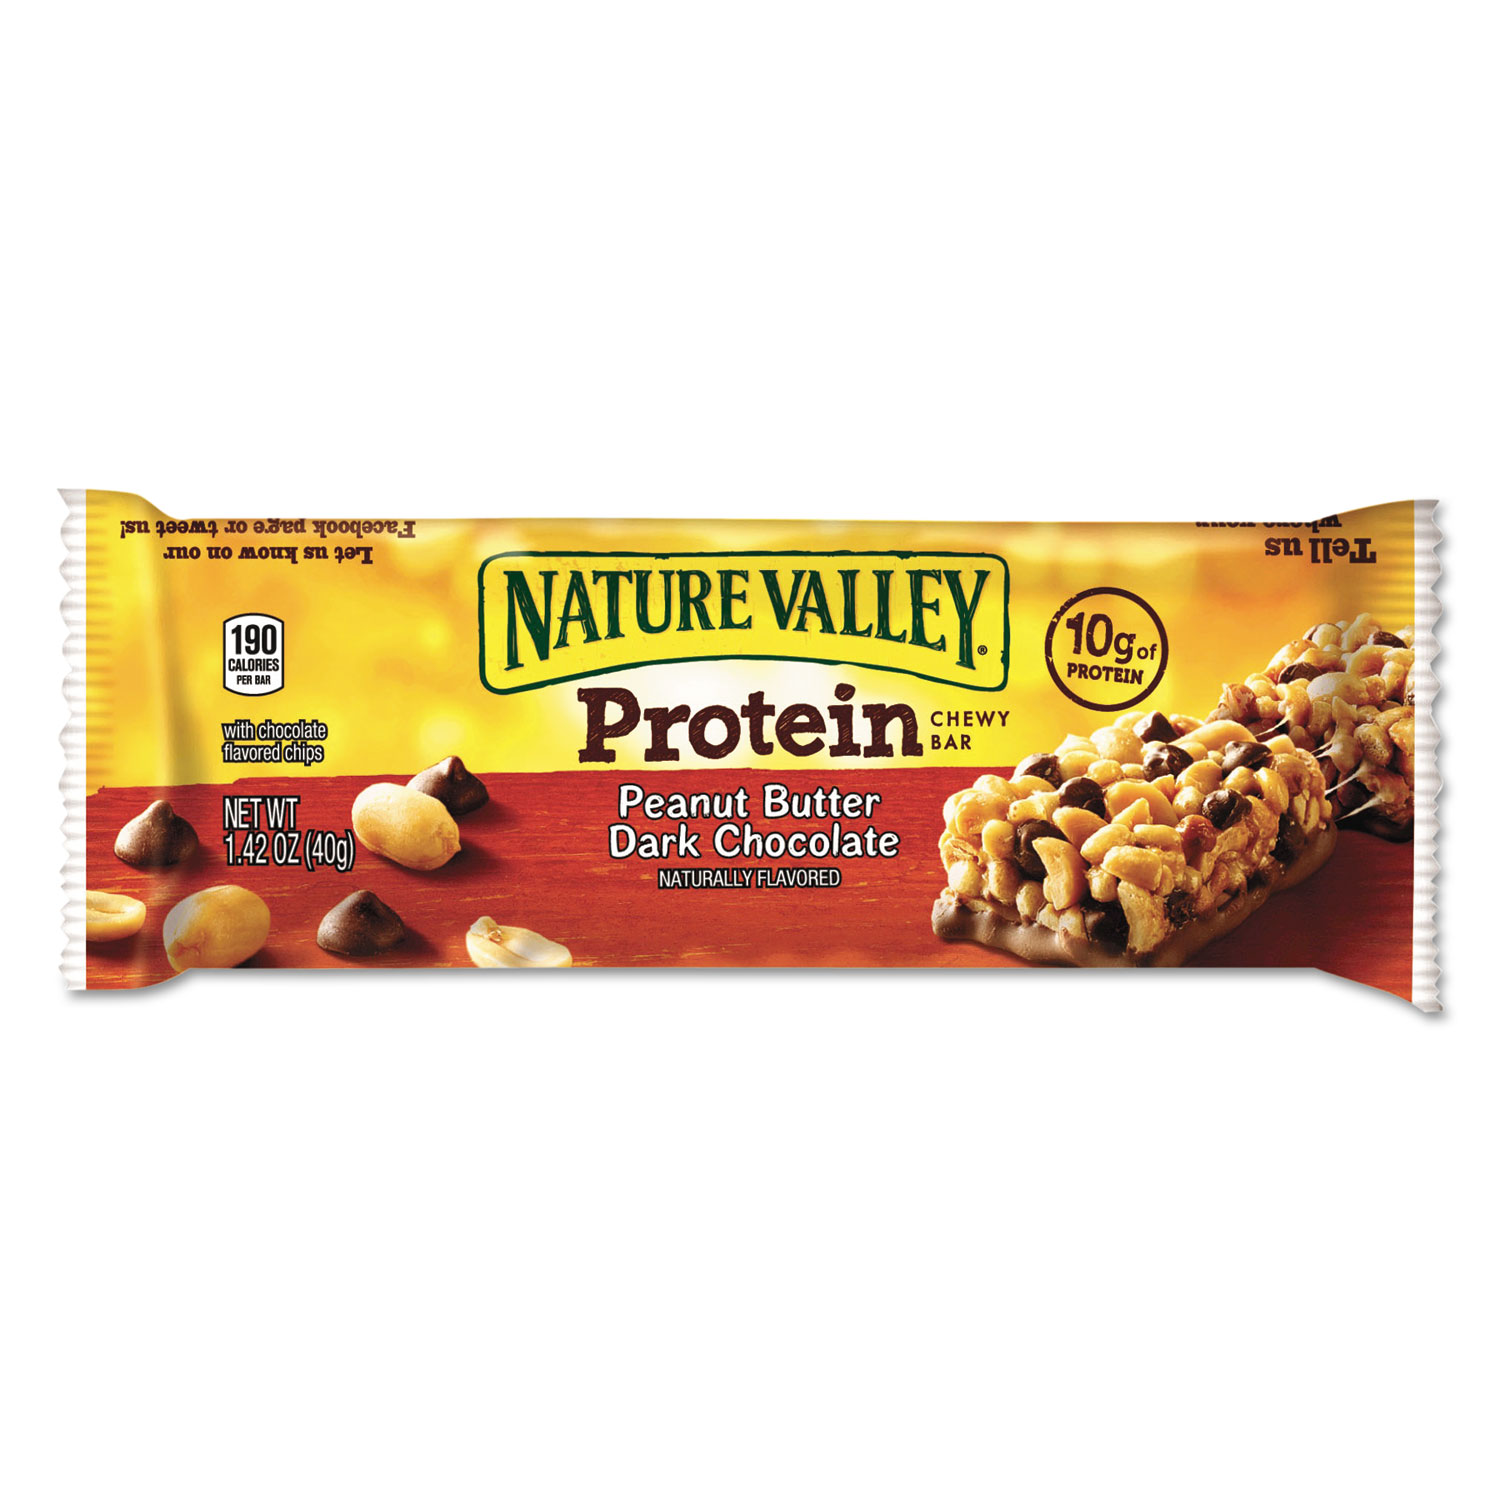 Protein Chewy Bar, Peanut Butter Chocolate, Box, 1.5 lb, 16 per box